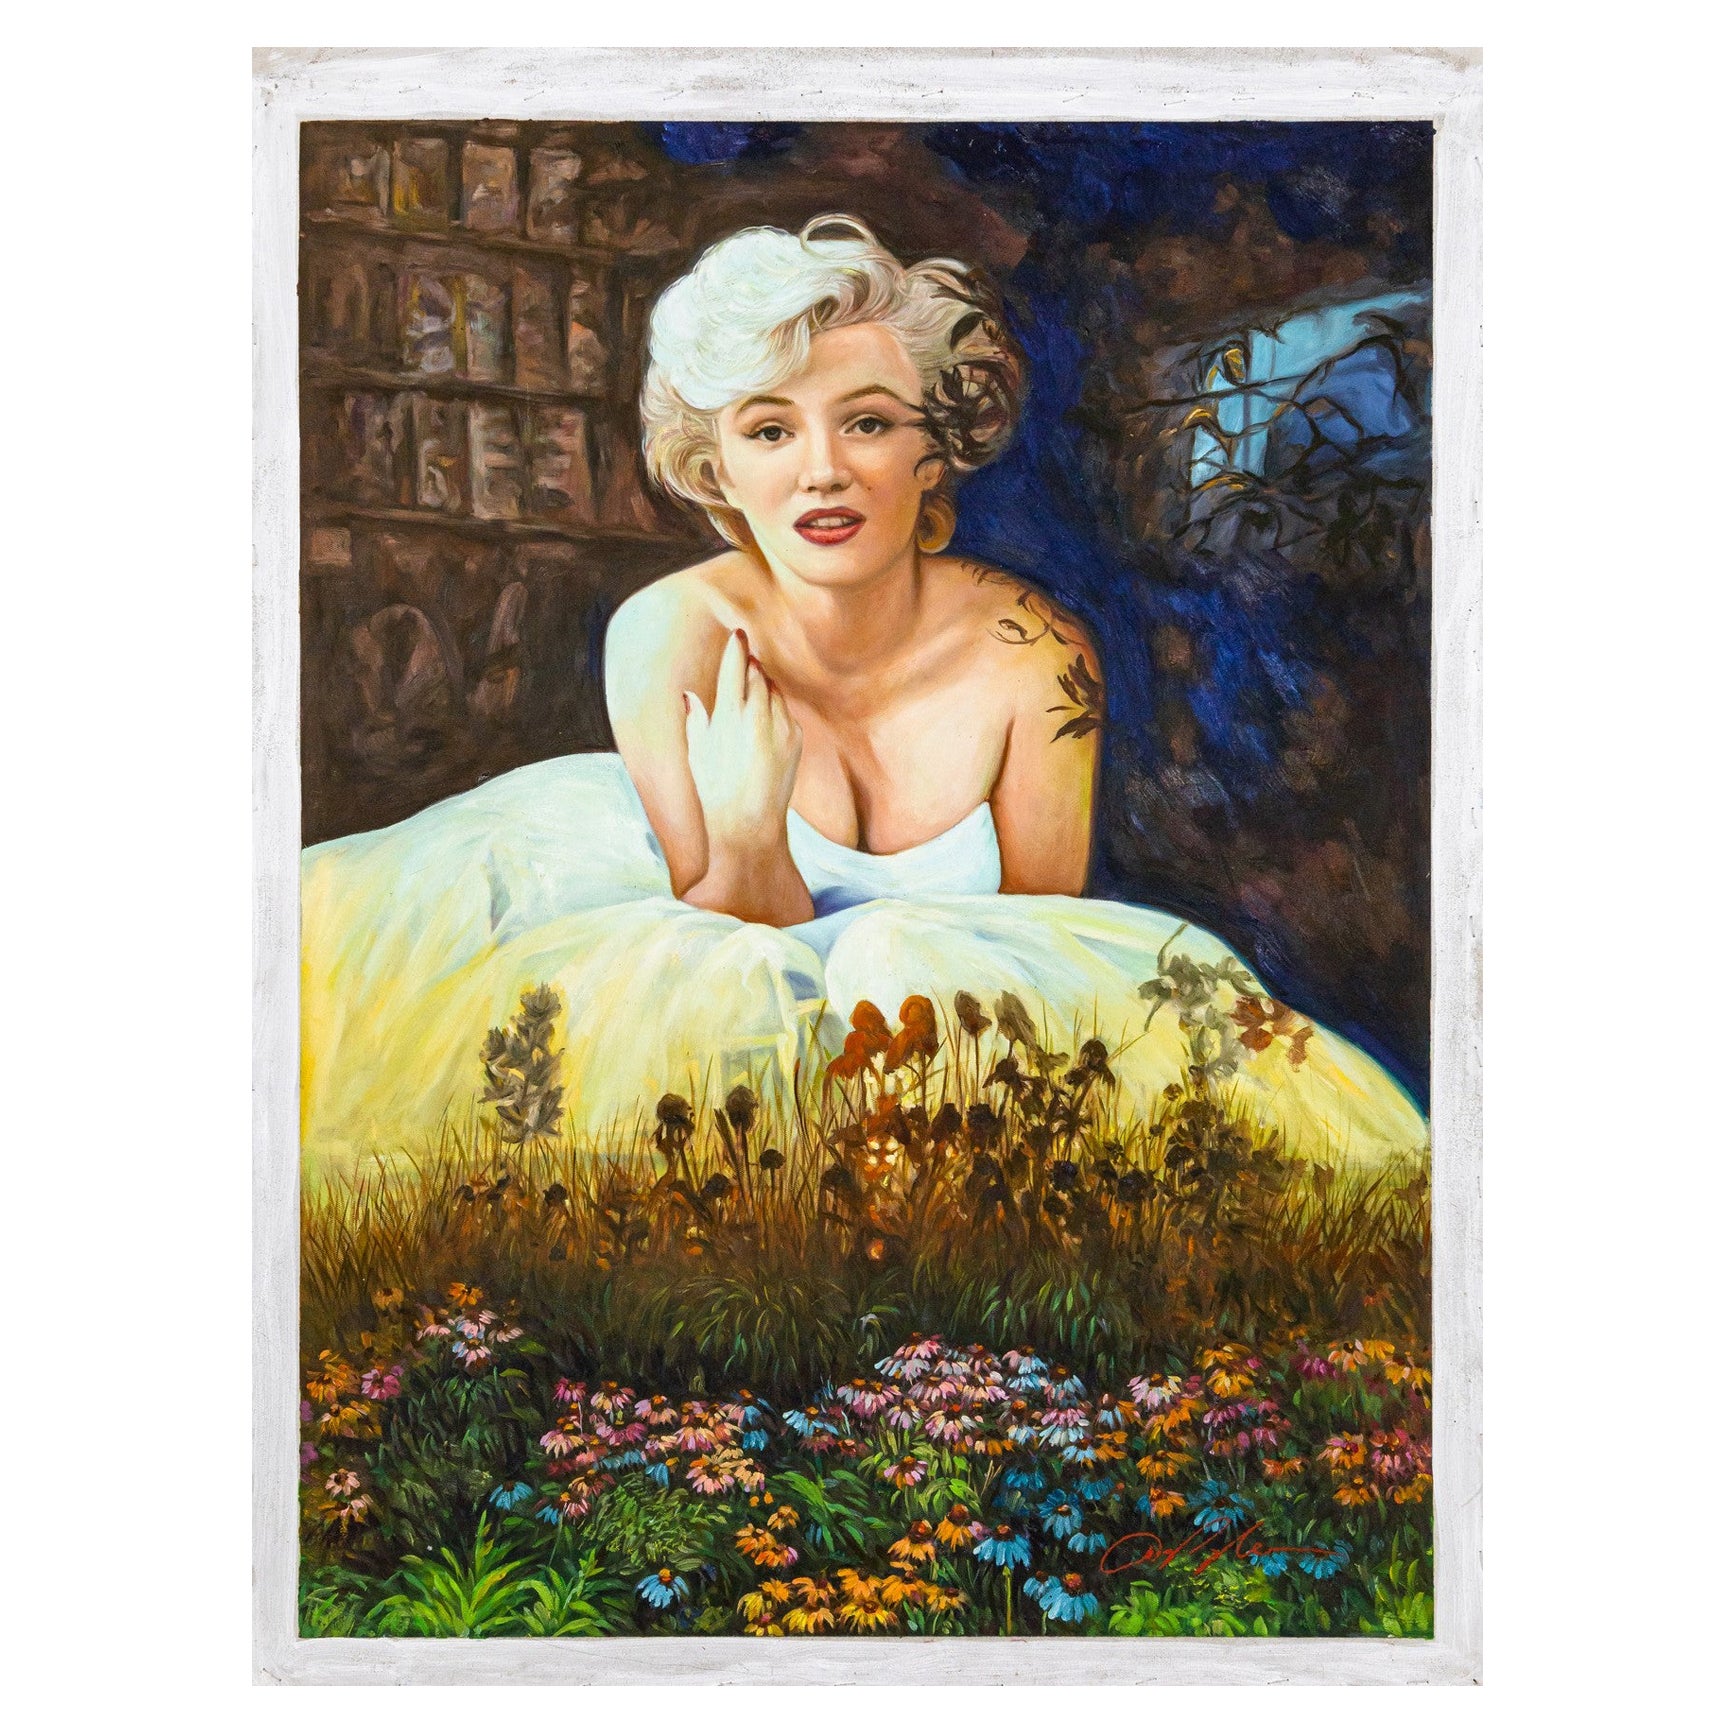 Dominic Pangborn, Marilyn in Nature, signiertes Gemälde in Mischtechnik aus Acryl auf Leinwand